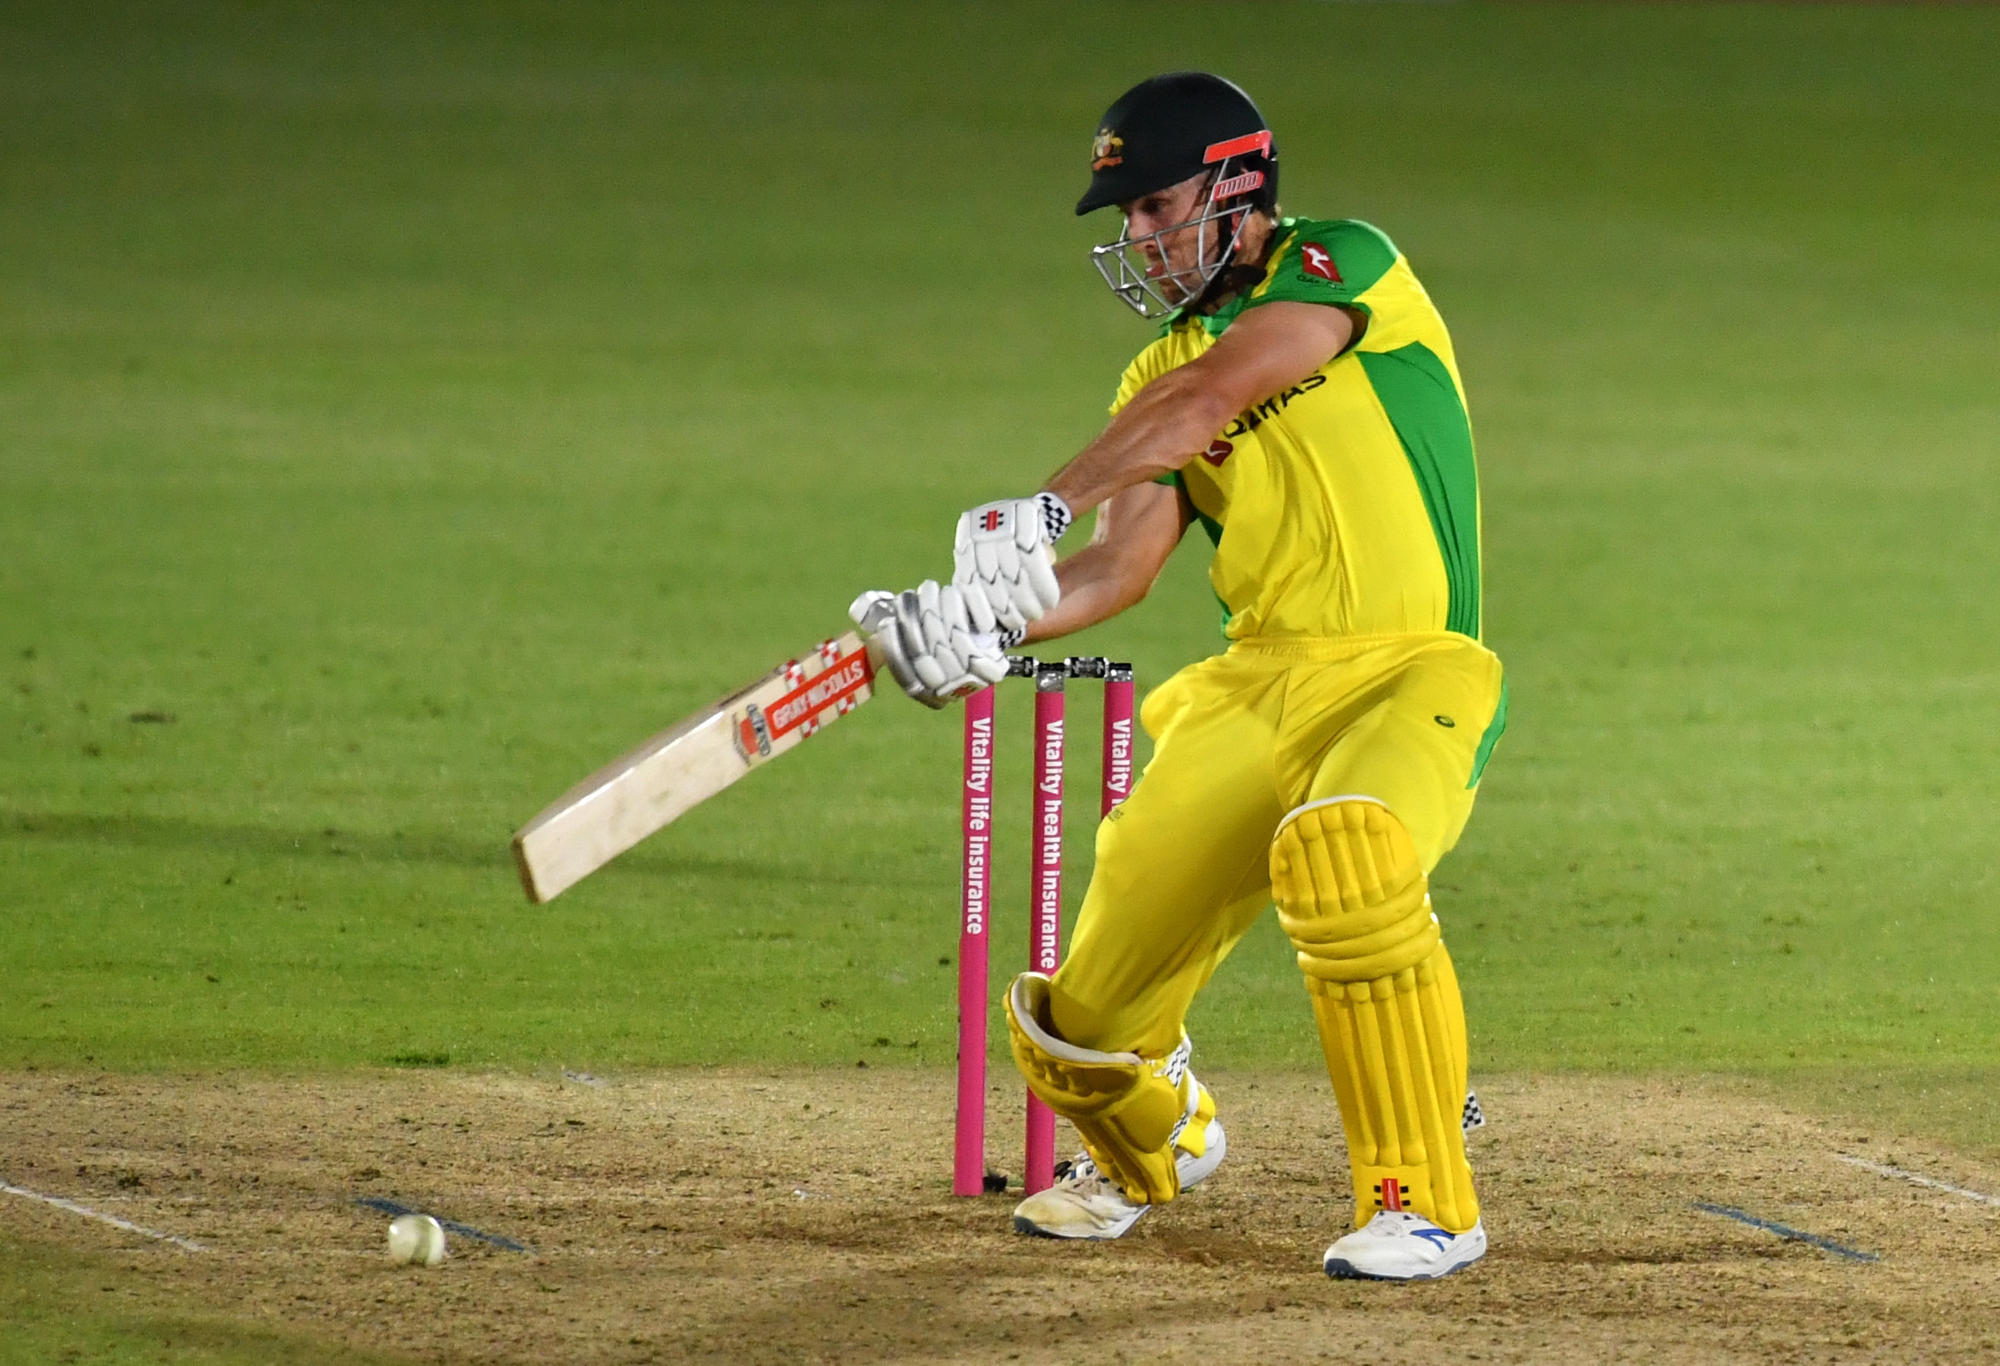 Australia's batsman Mitchell Marsh